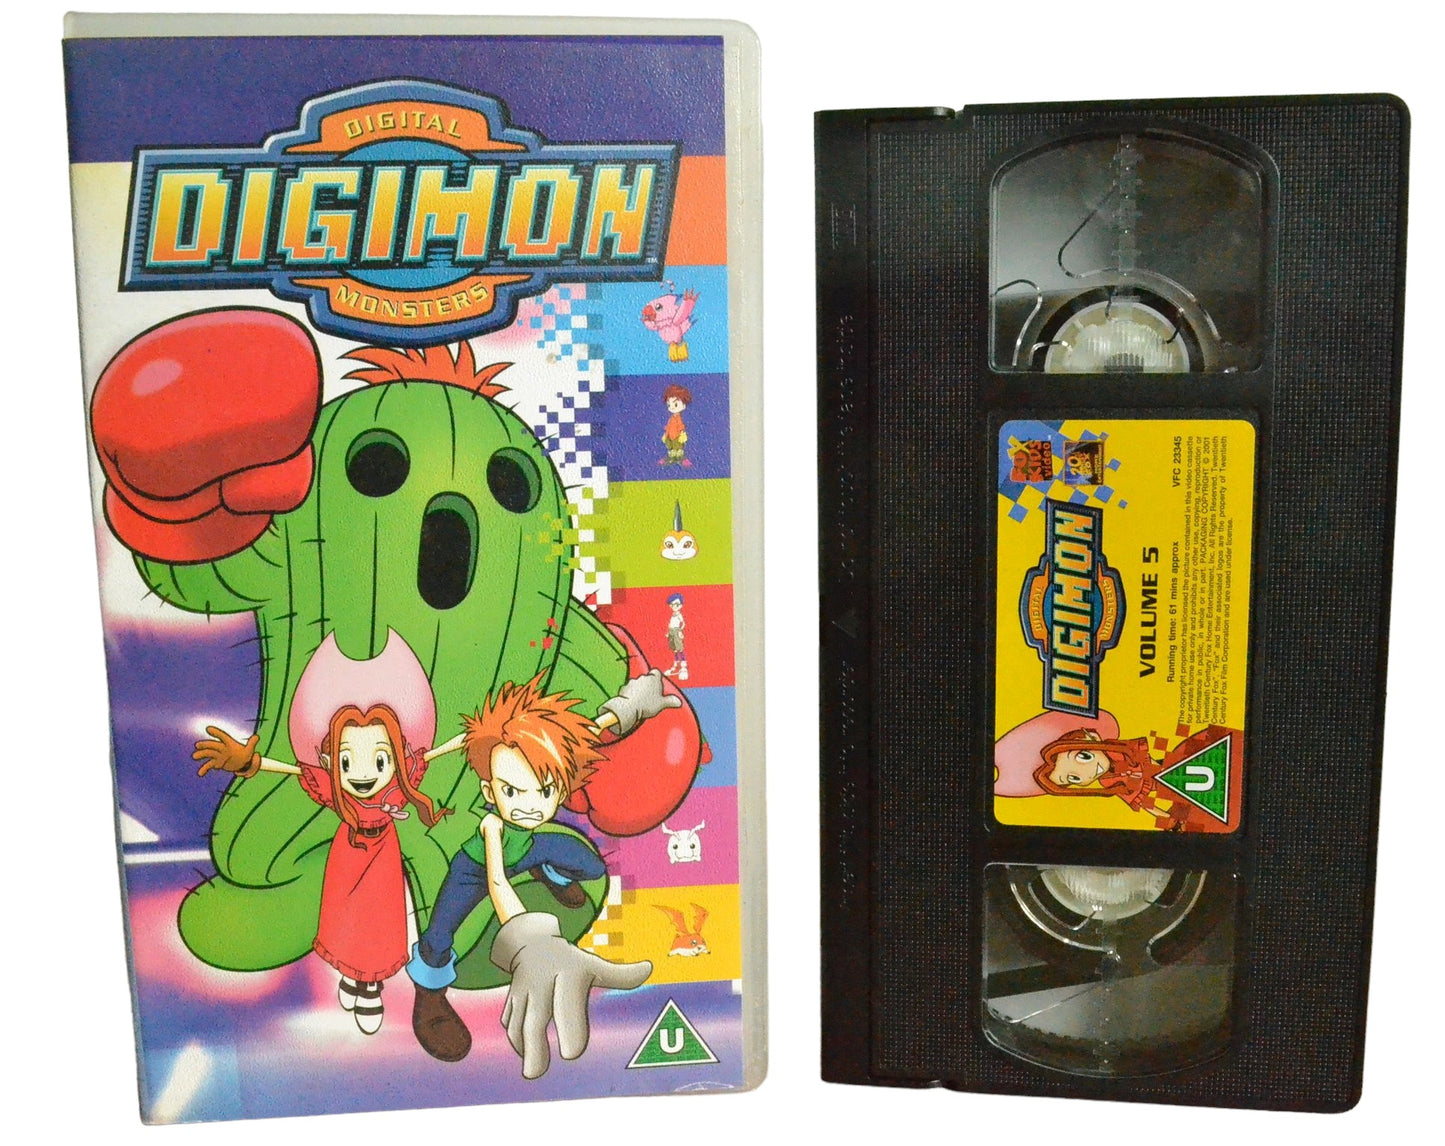 Digimon : Digital Monsters Volume 5 - Fox Kids Video - D888525 - Children - Pal - VHS-